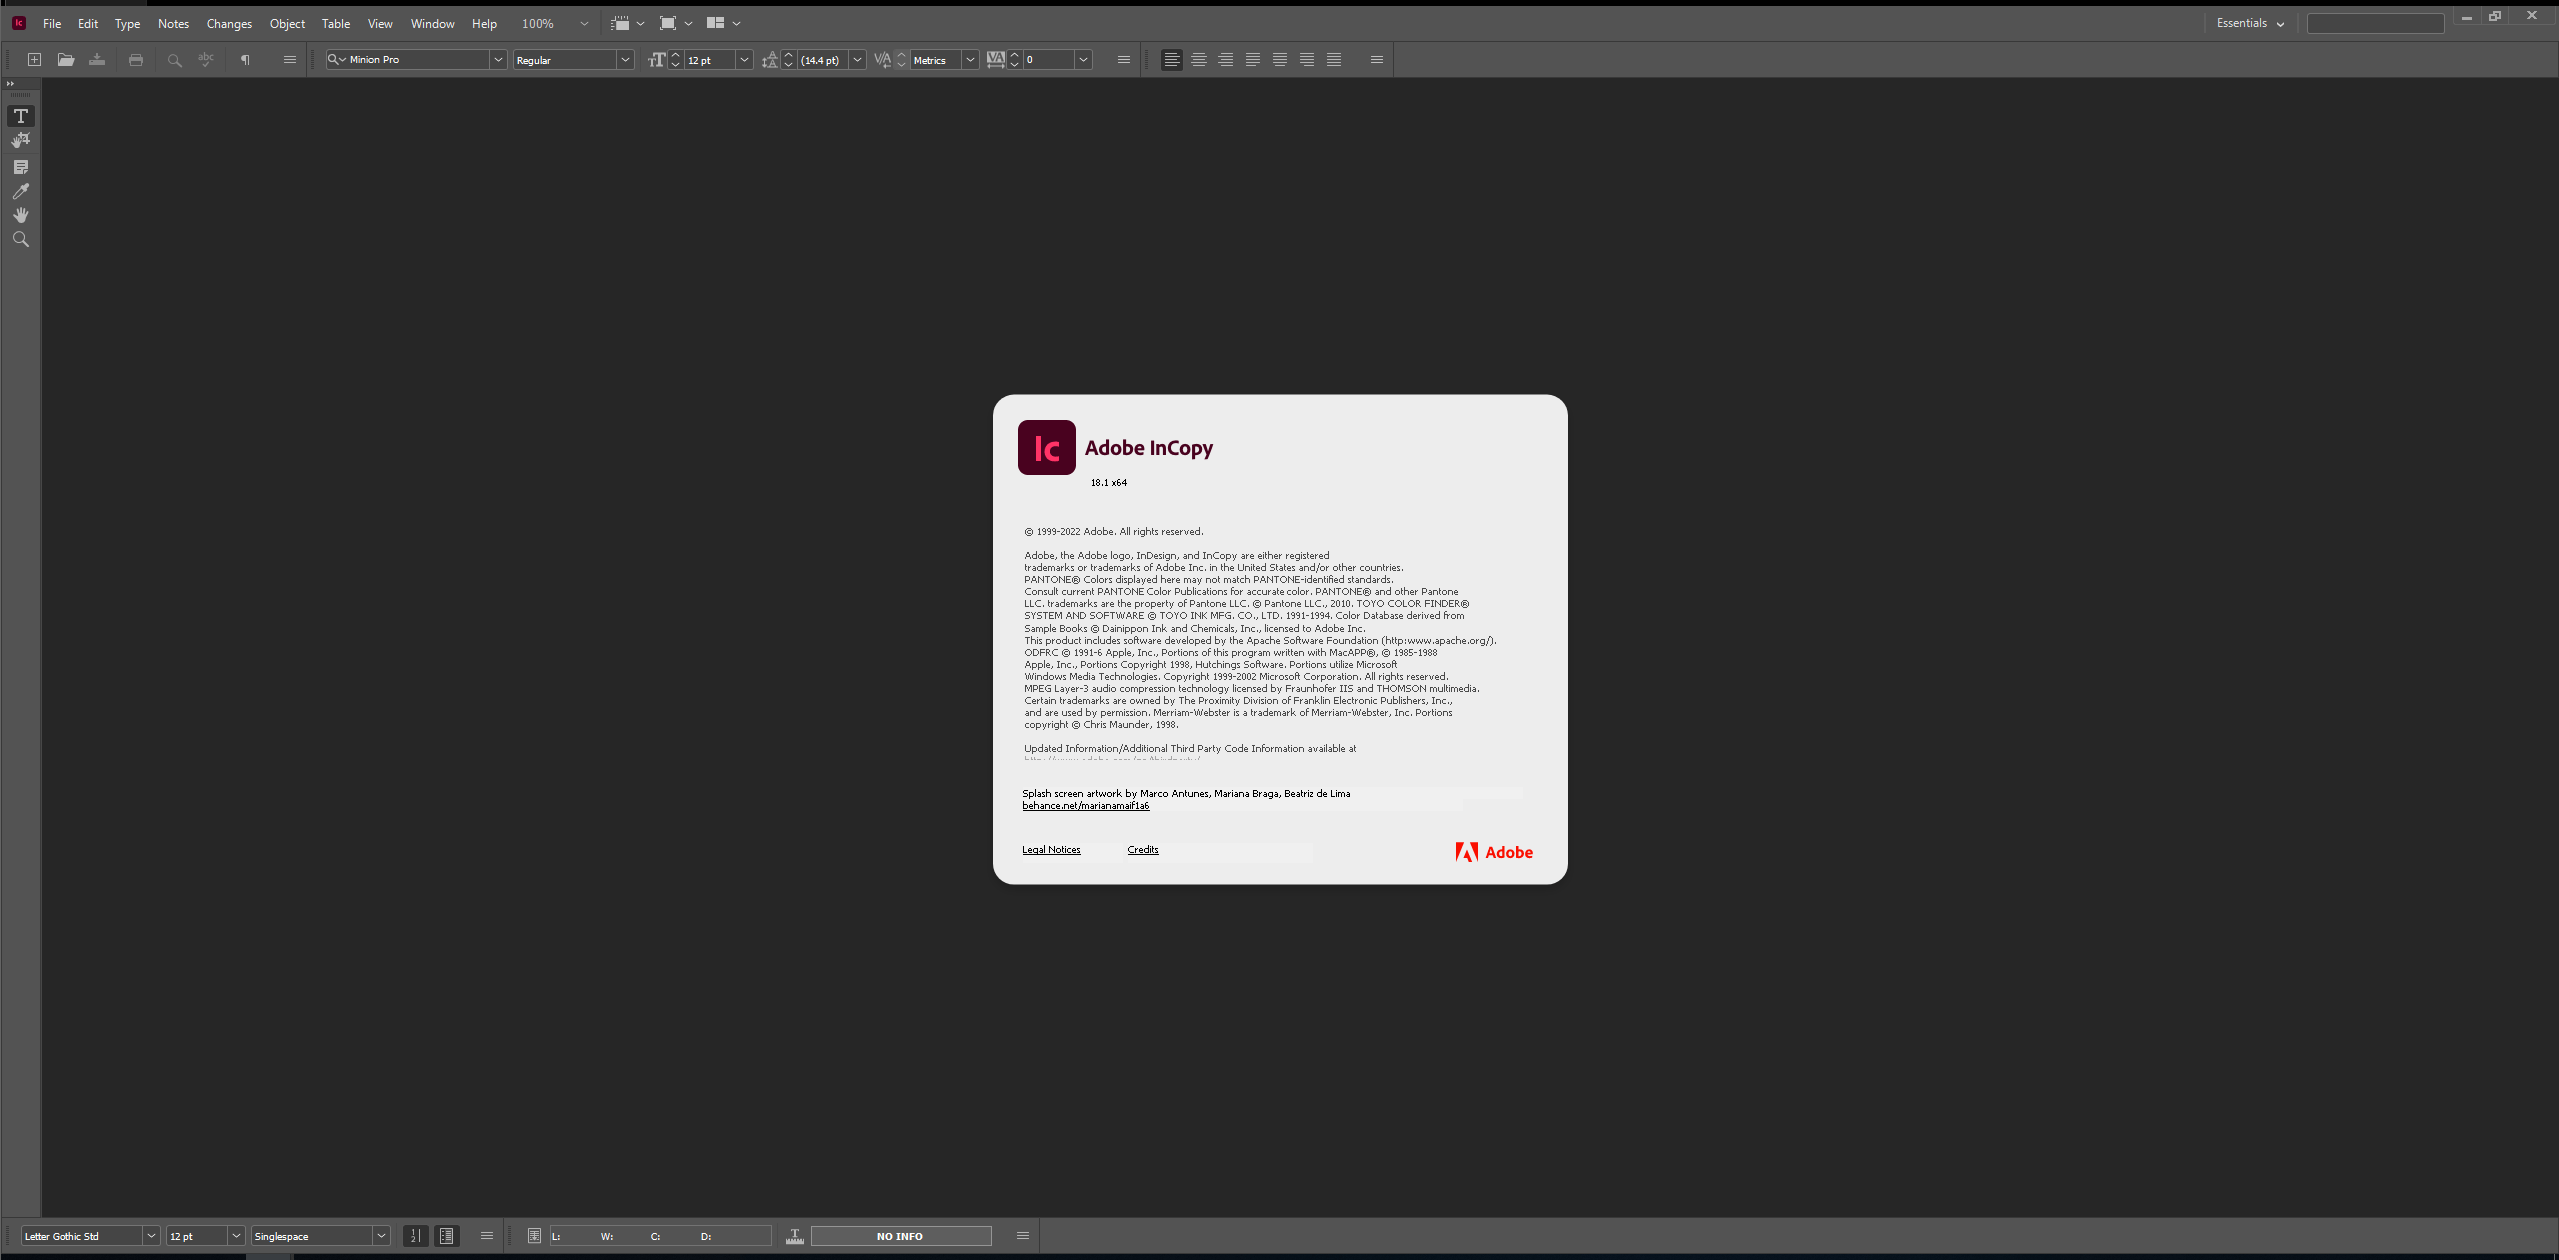 Adobe InCopy 2023 v18.4.0.56 instal the new for mac